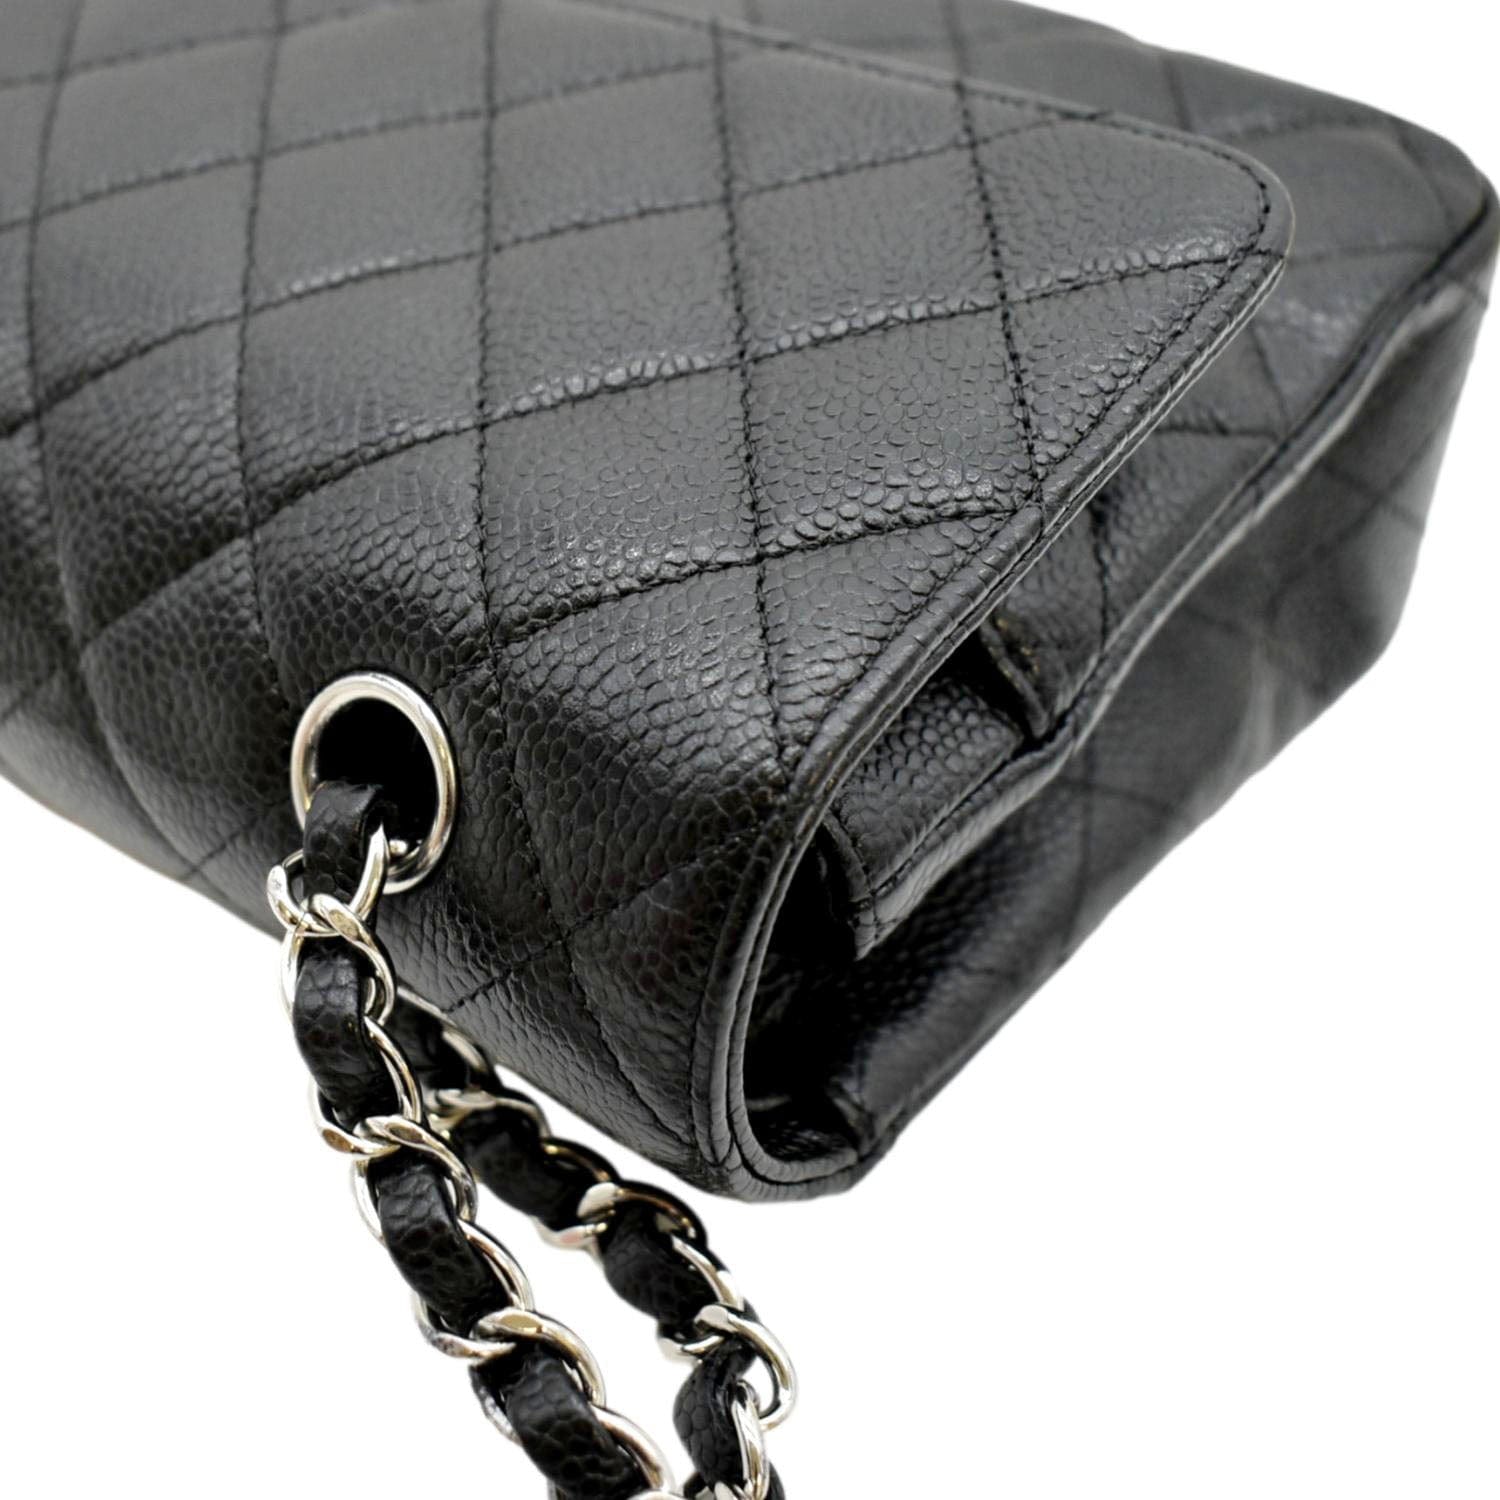 chanel flap bag caviar leather